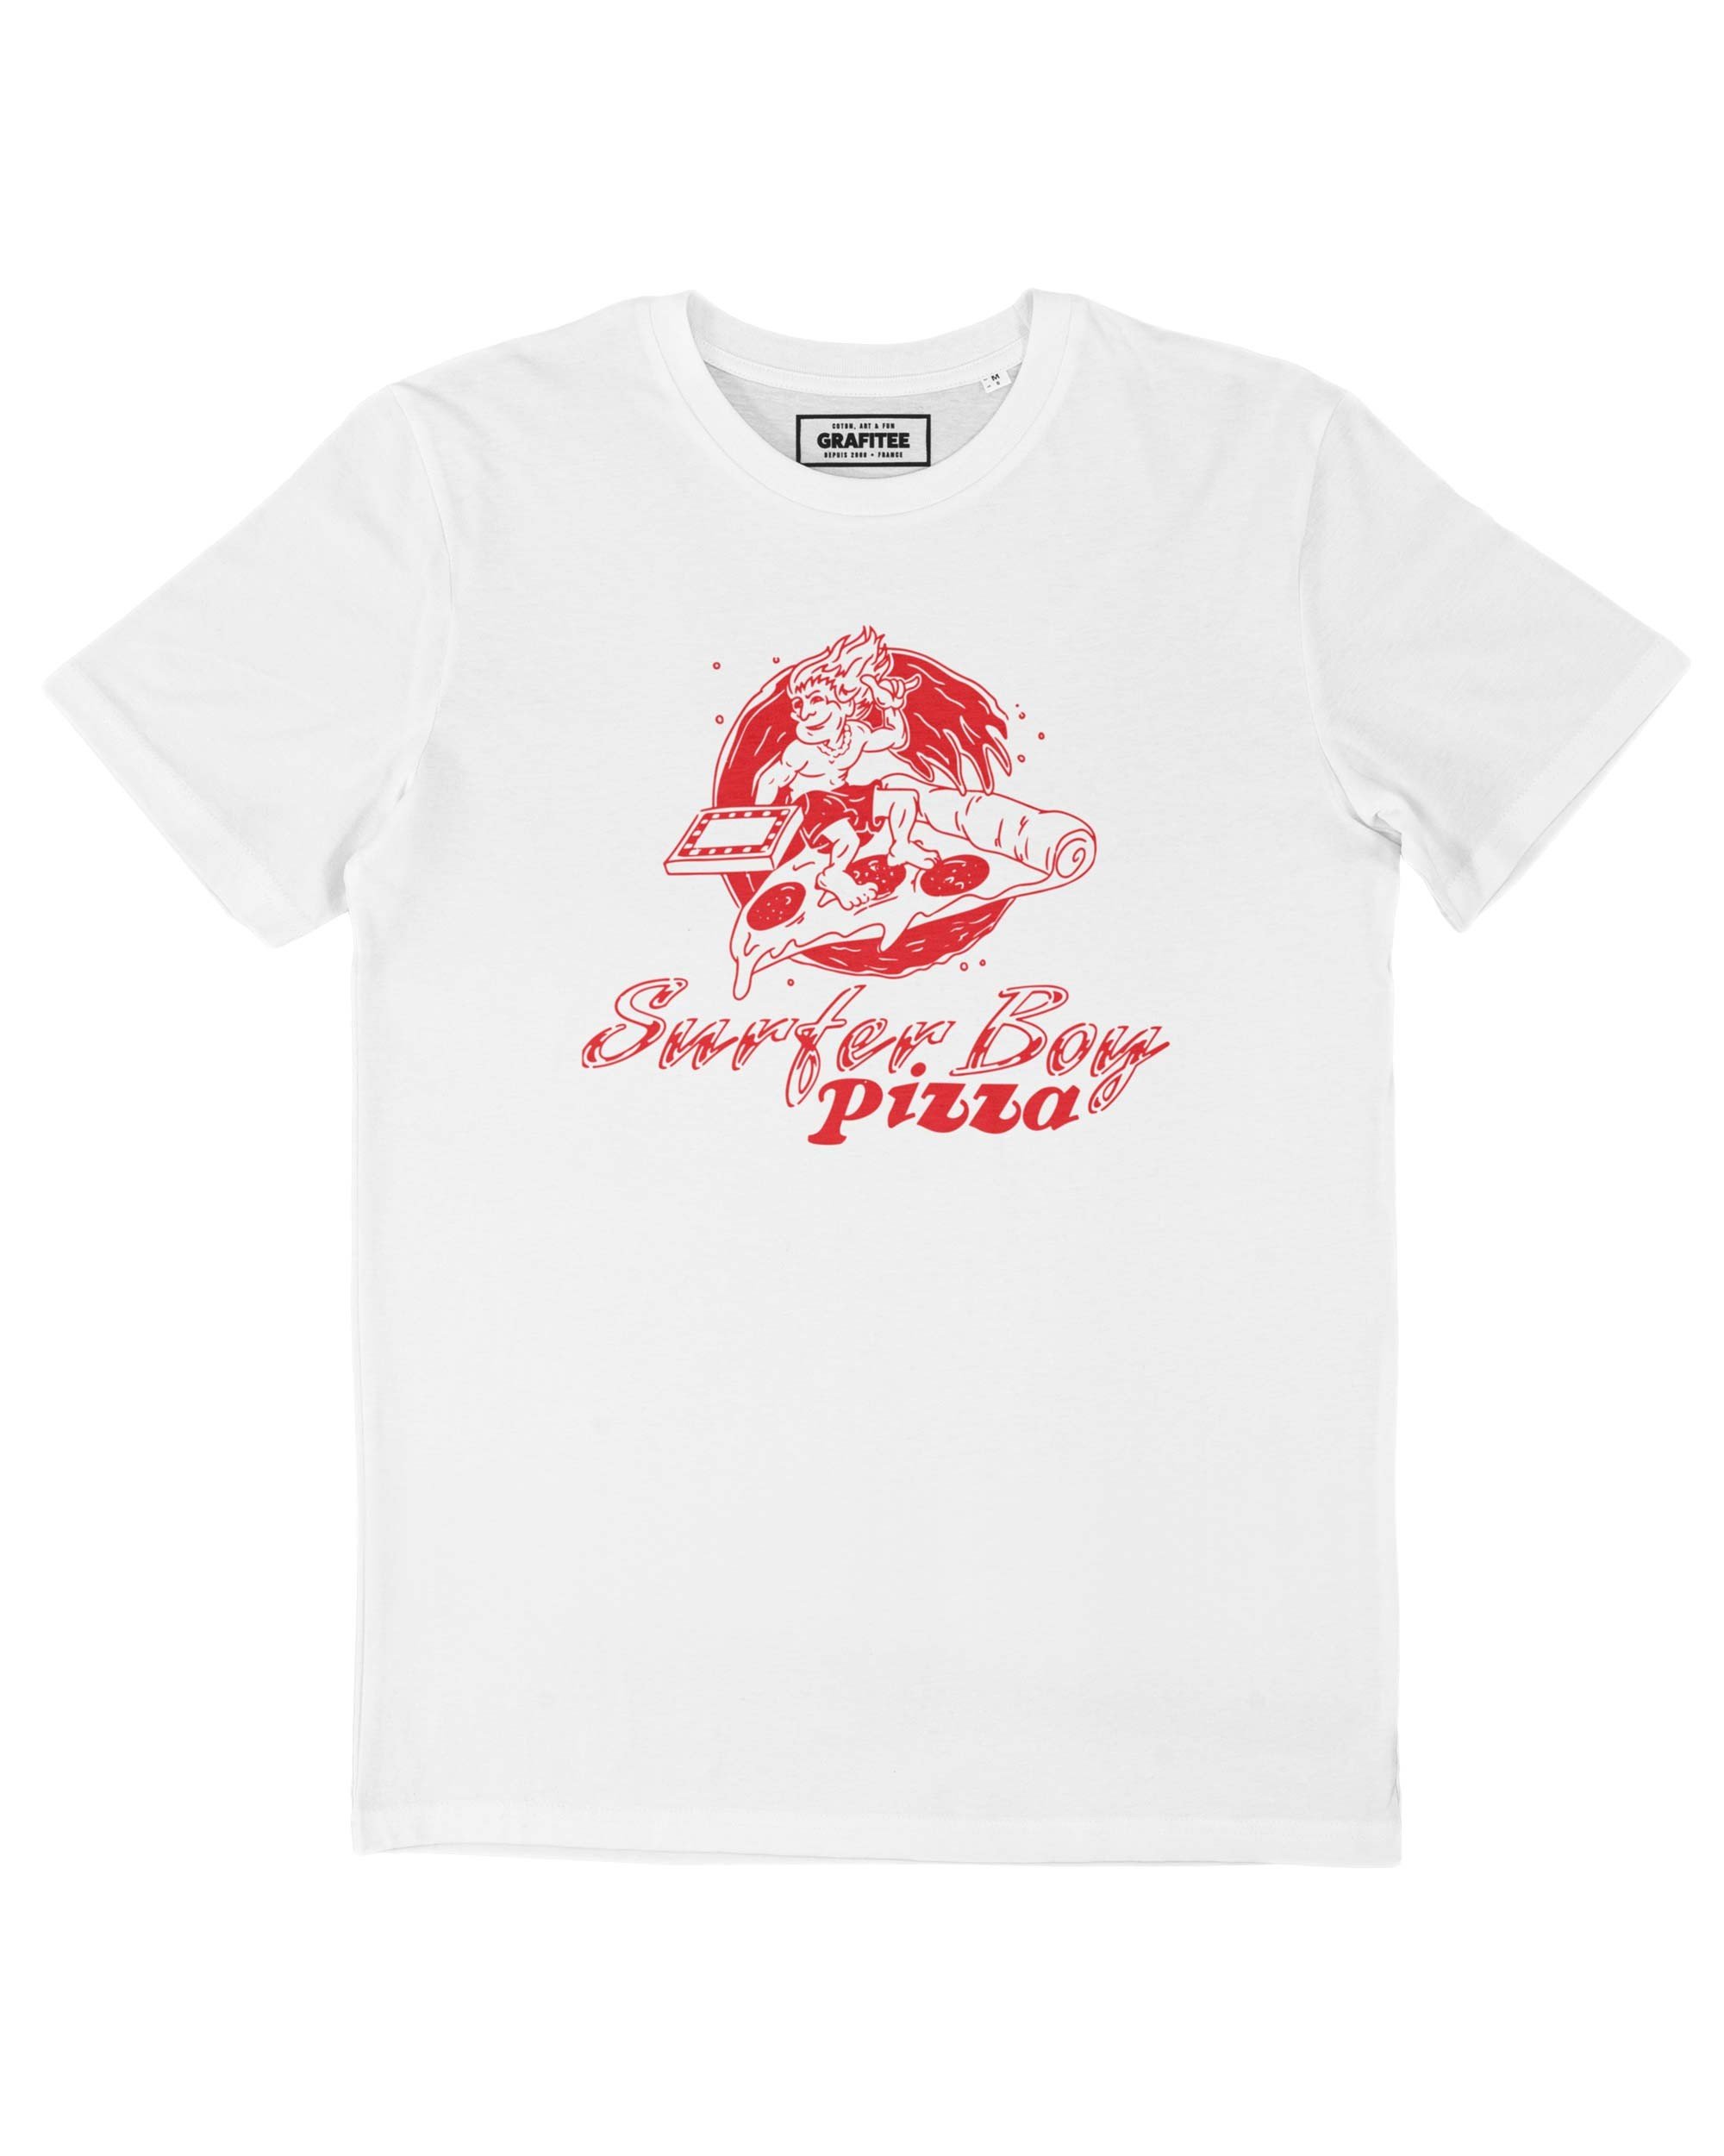 T-shirt Surfer Boy Pizza Grafitee